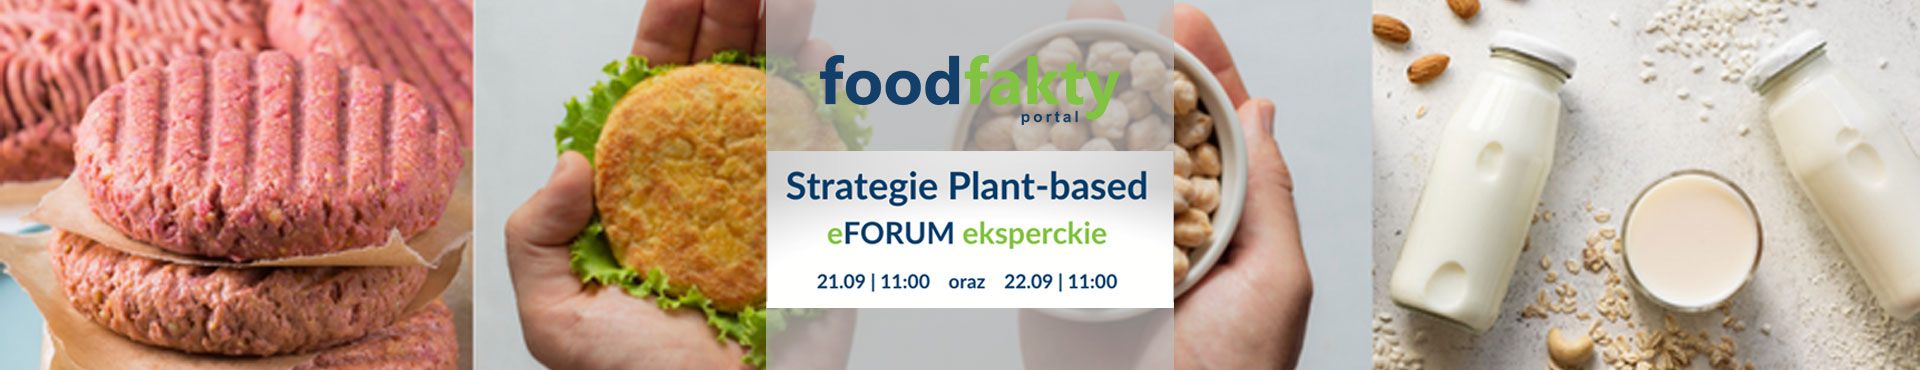  eFORUM FoodFakty - Strategie Plant-based